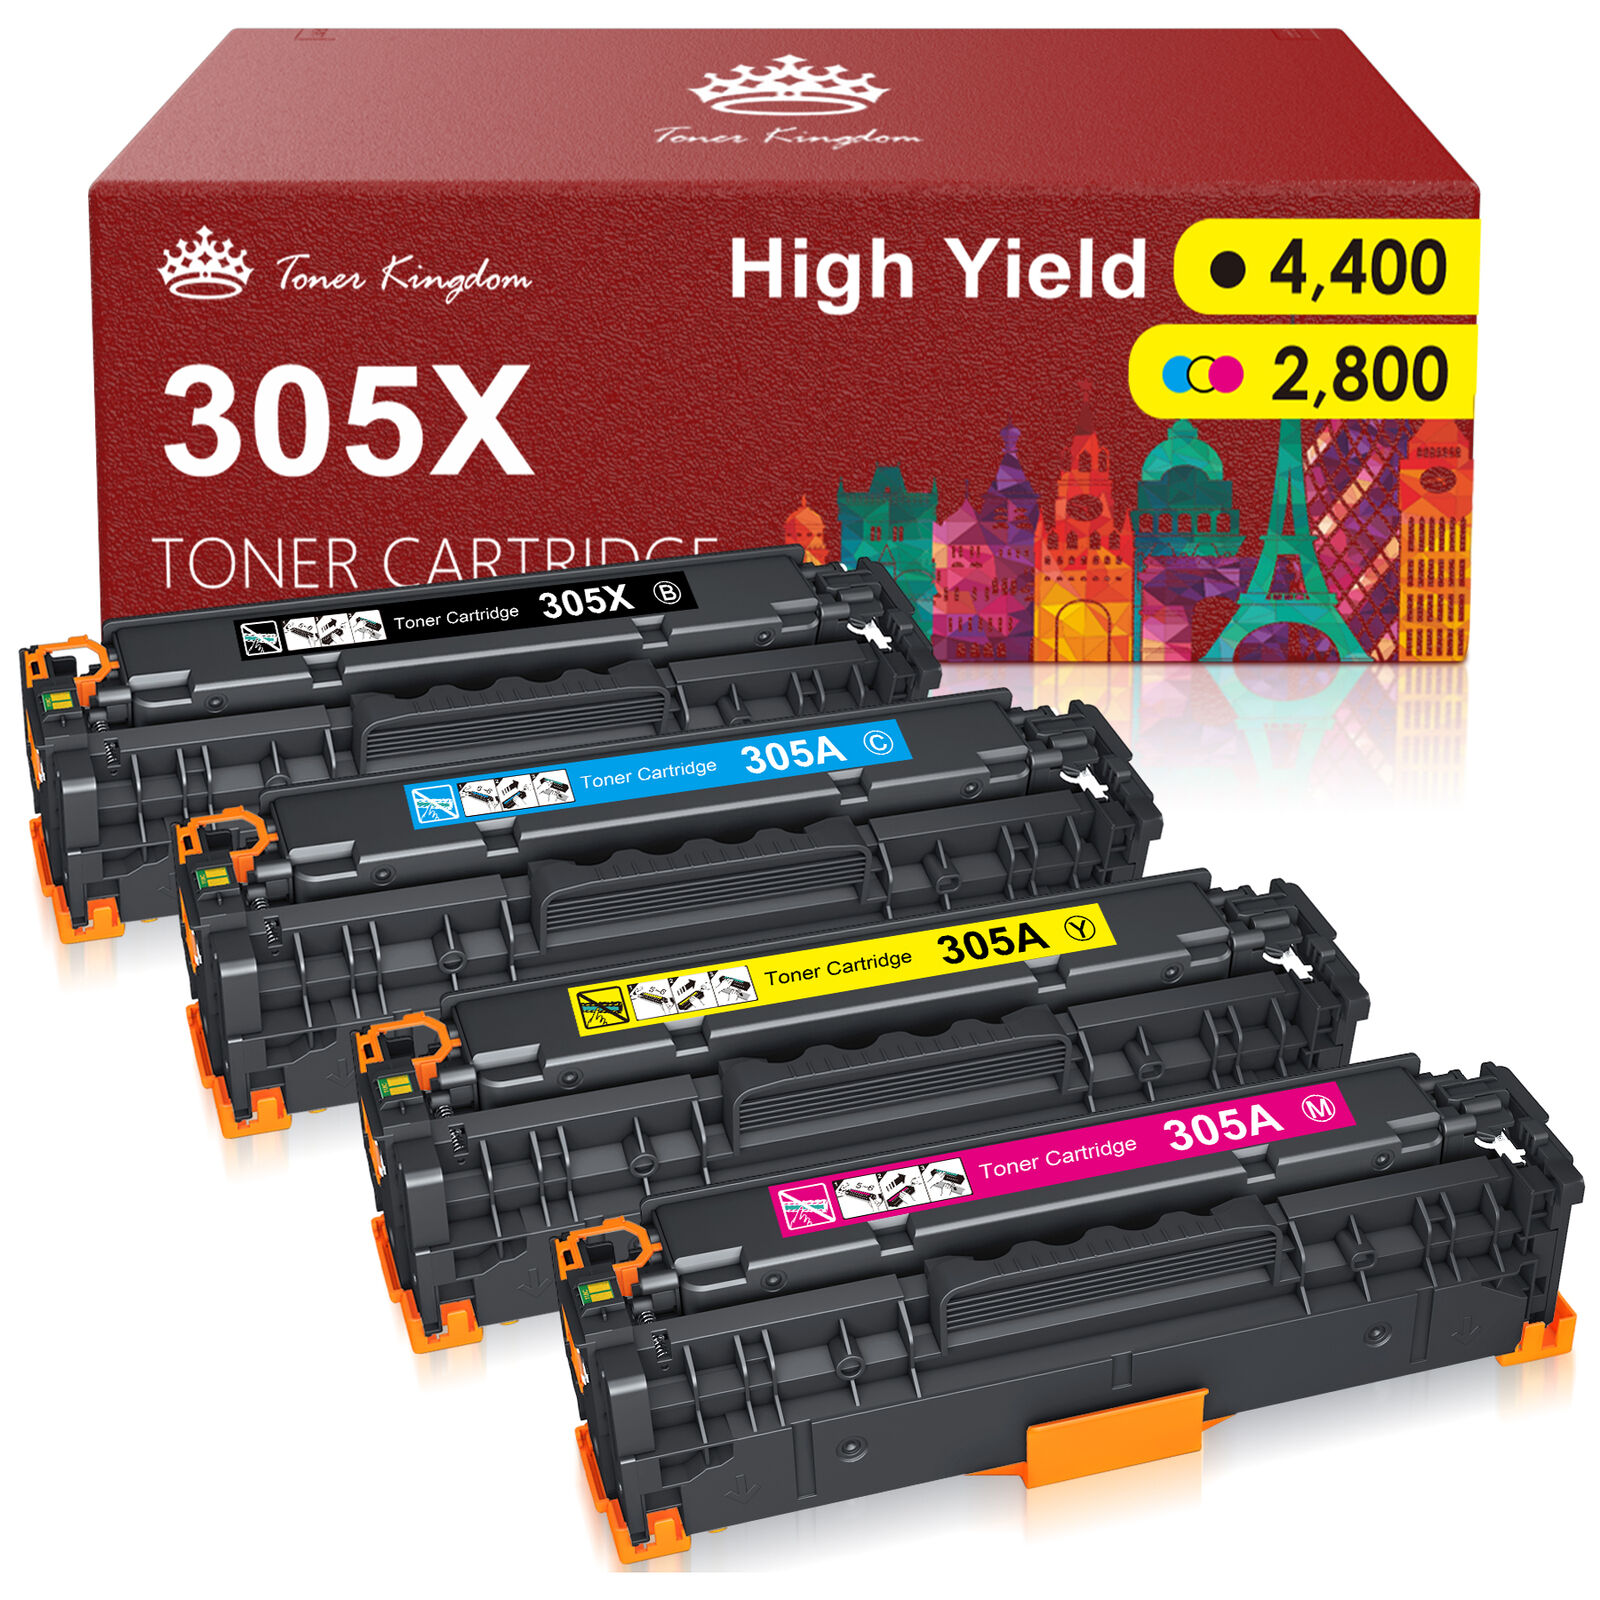 Toner Compatible with HP 305A 305X CE410A Laserjet Pro 400 M451dn MFP M475dn Lot